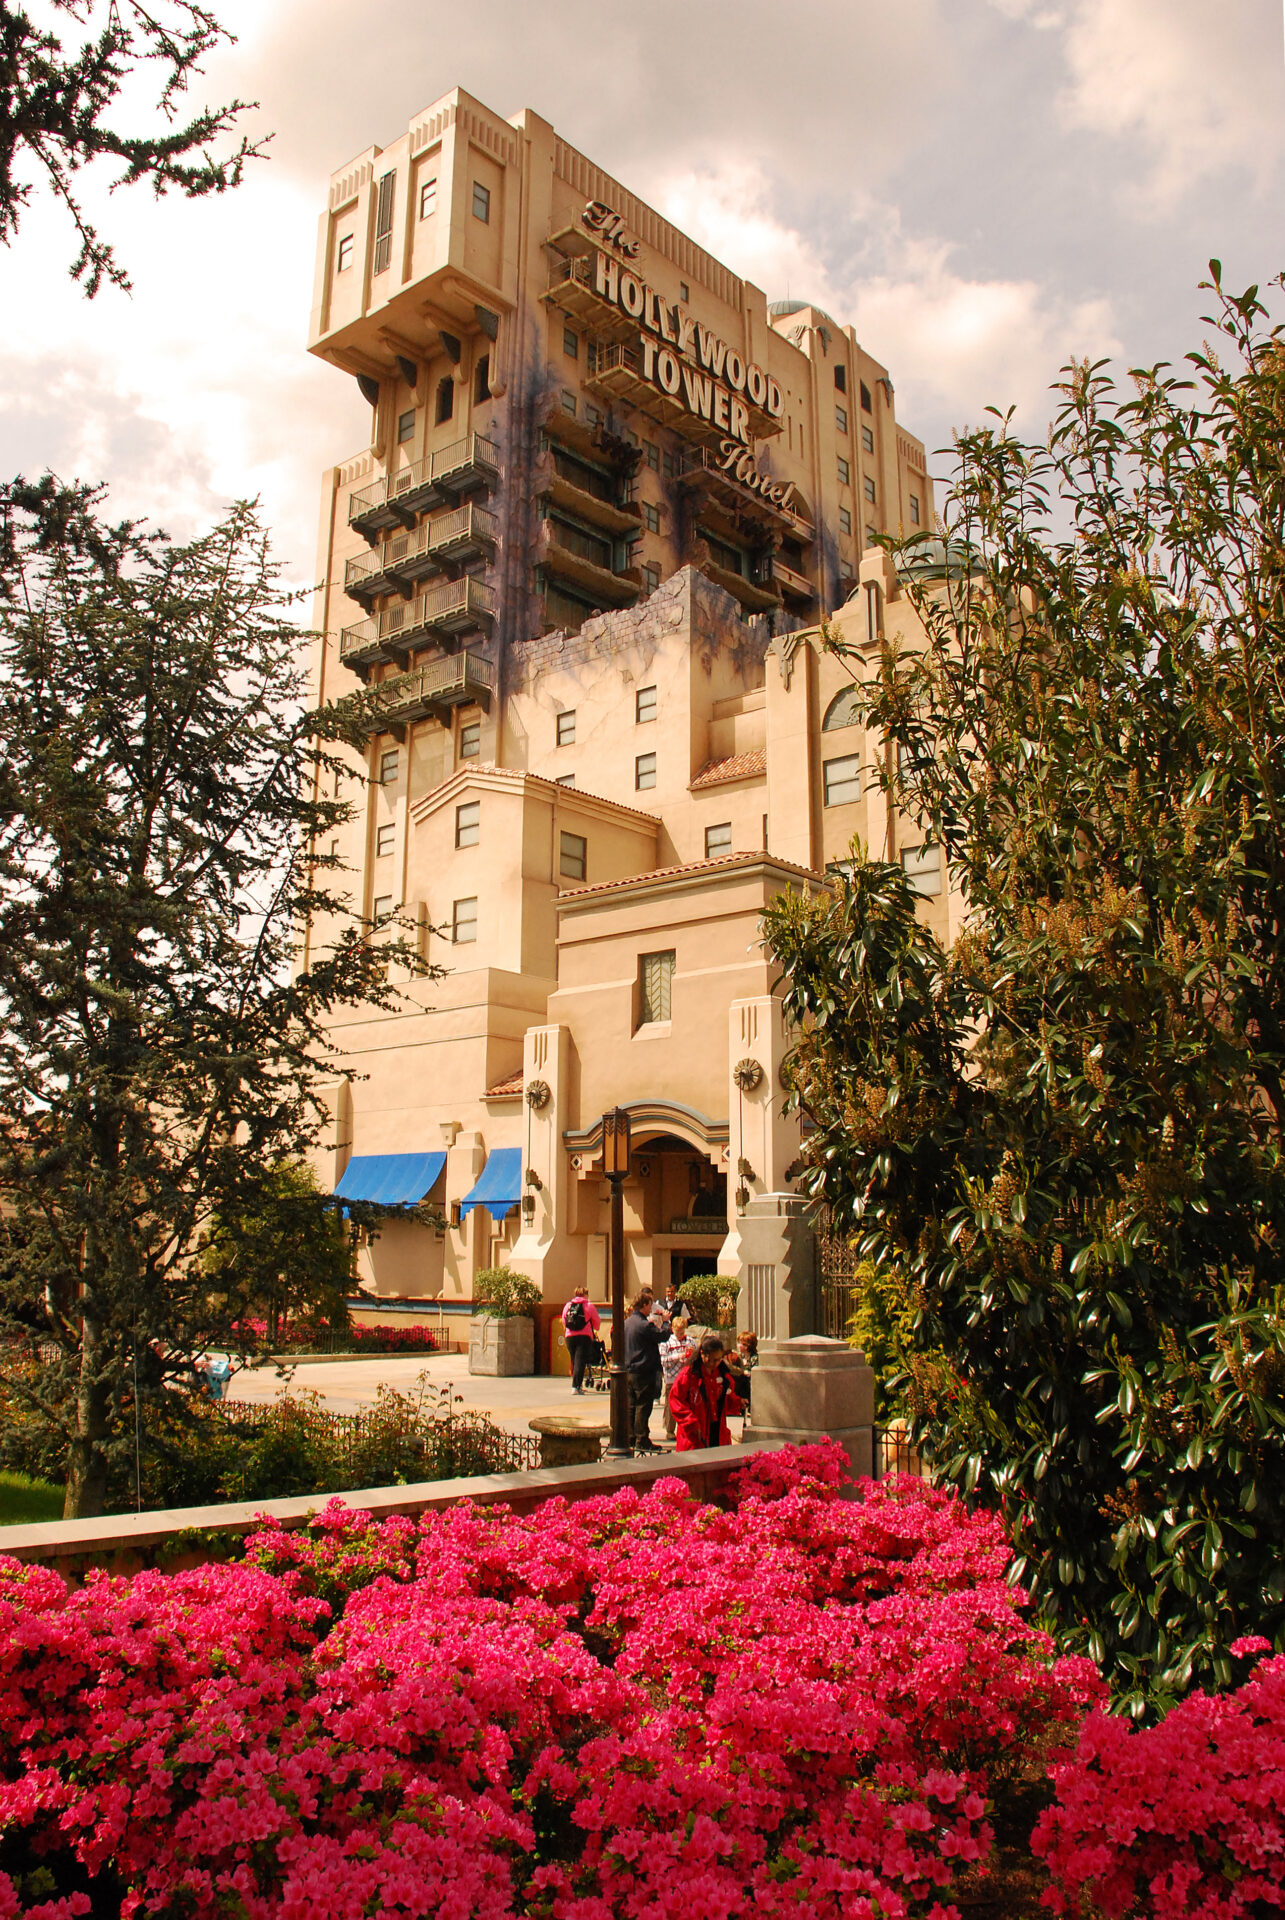 Disneyland Paris Walt Disney Studios Park Tower of Terror Hollywood Tower Hotel Drop Tower Haunted House